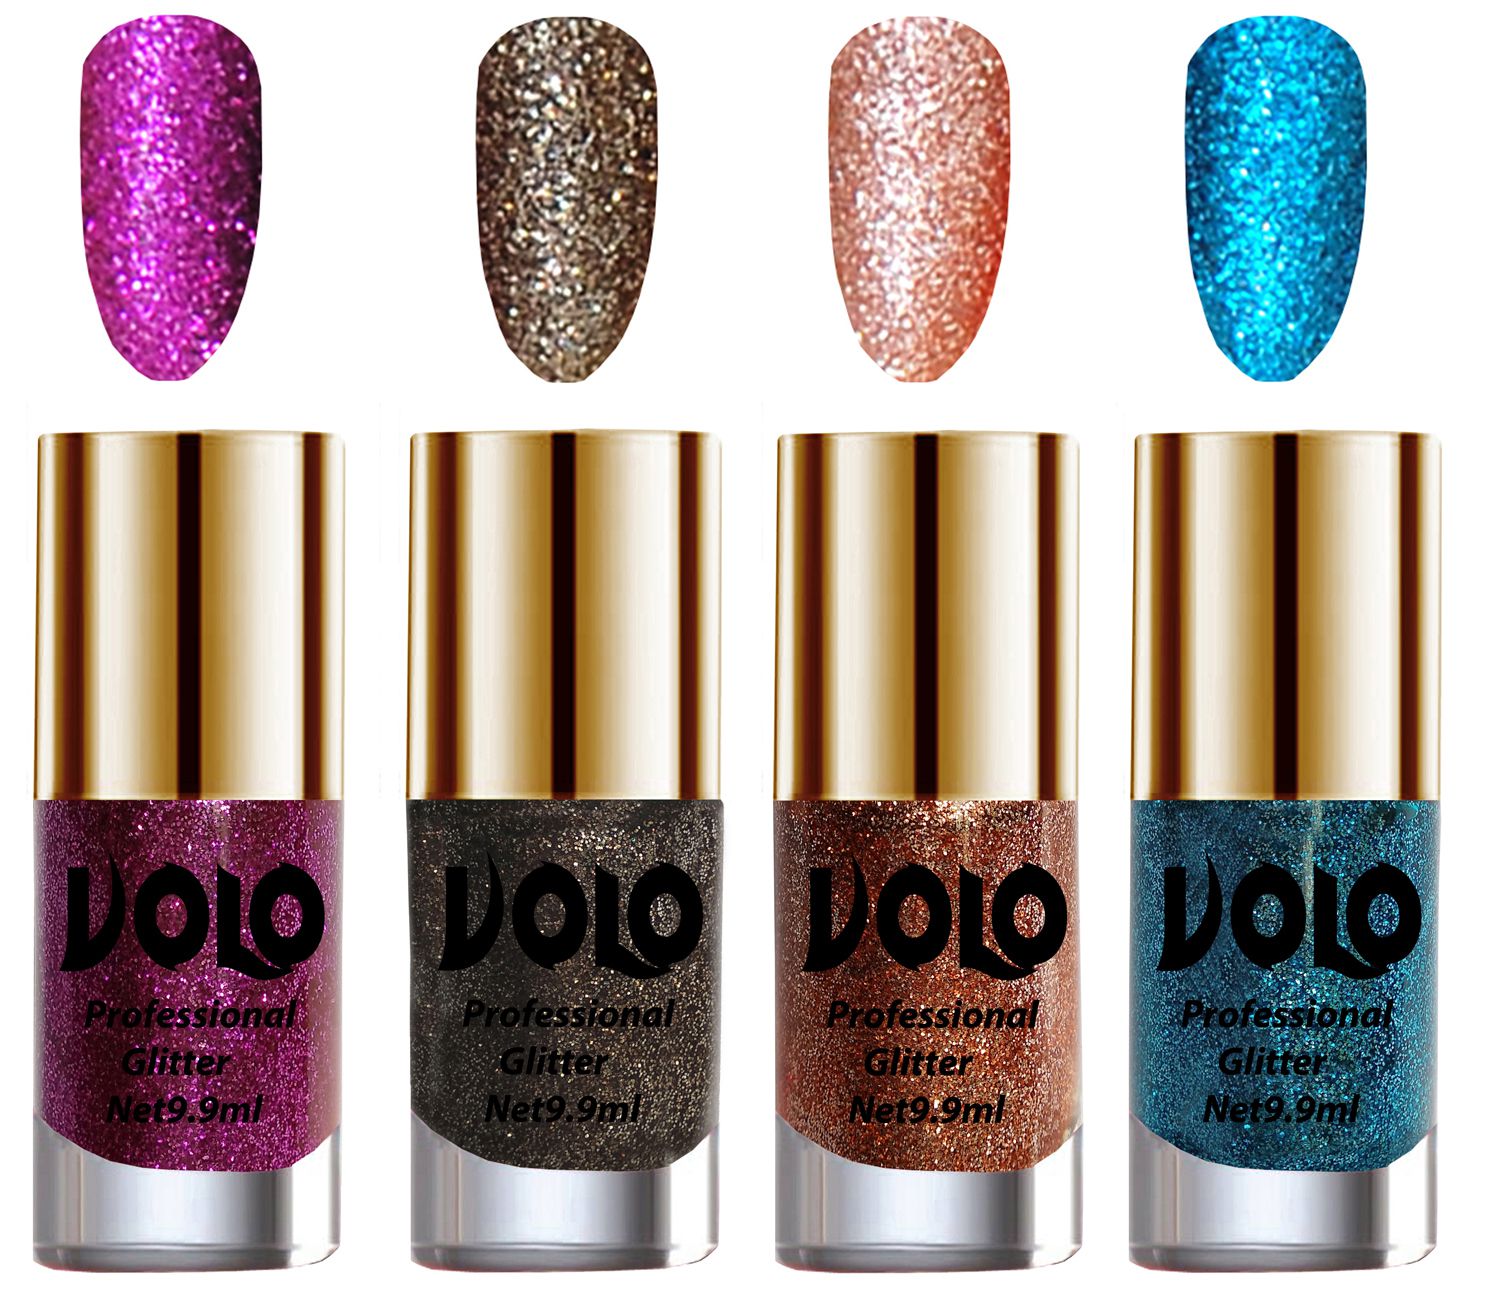     			VOLO Professionally Used Glitter Shine Nail Polish Purple,Grey,Peach Blue Pack of 4 39 mL